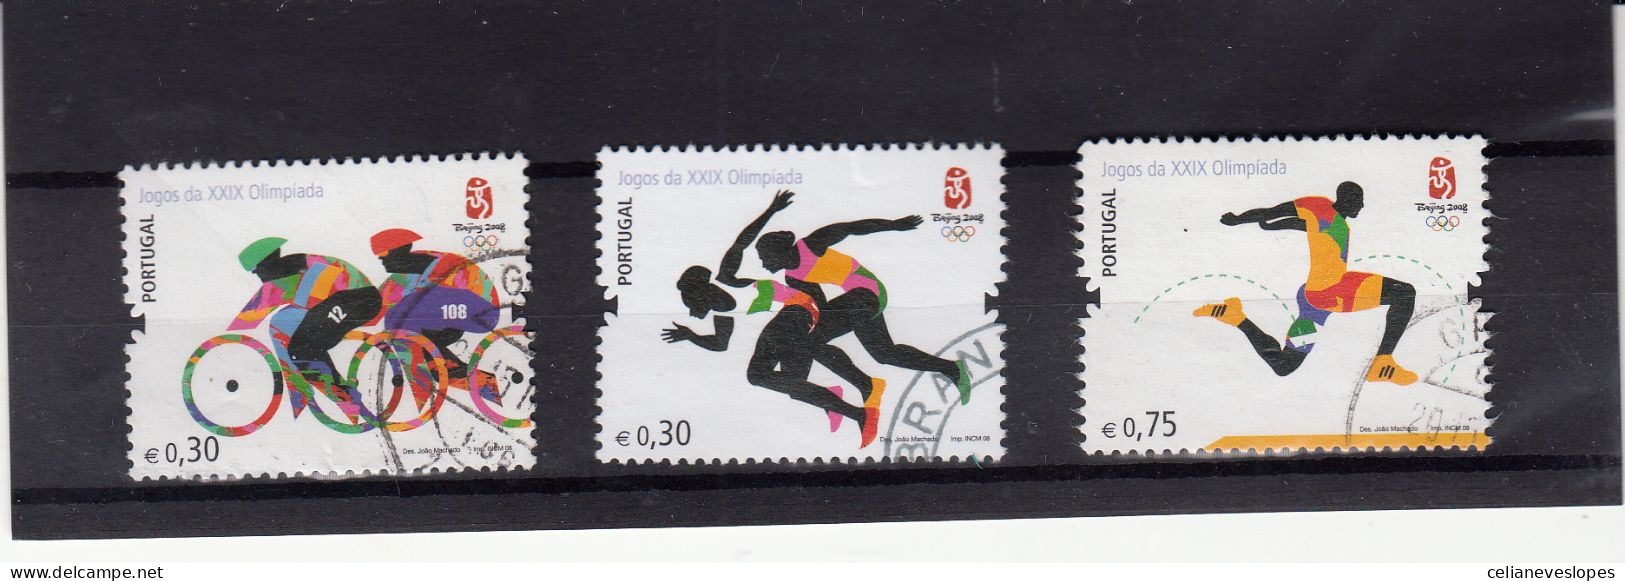 Portugal, Jogos Da XXIX Olimpiada, 2008, Mundifil Nº 3683 A 3685 Used - Usado